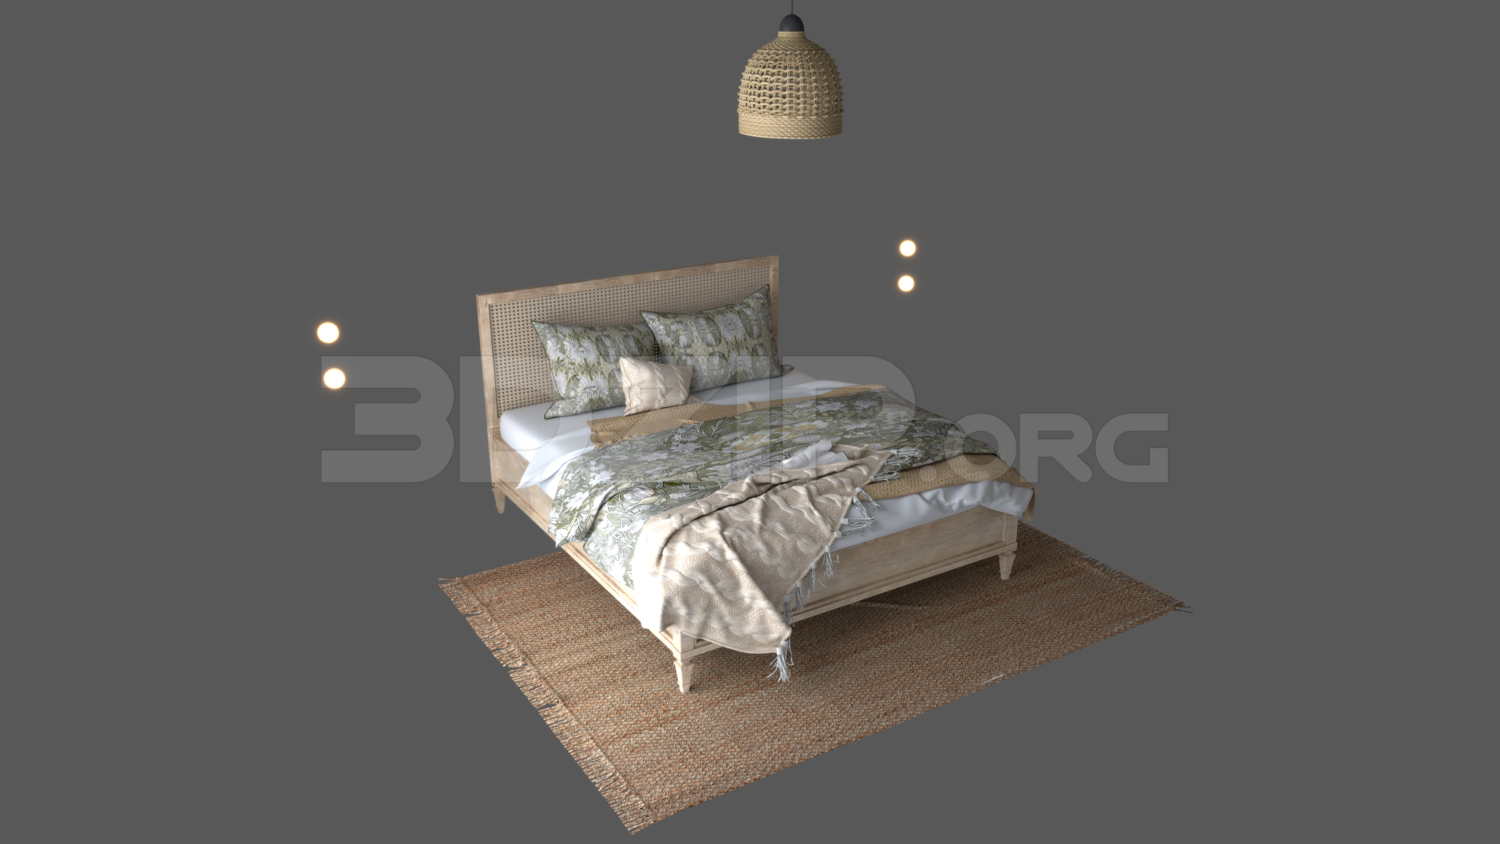 2620. Free 3D Bed Model Download